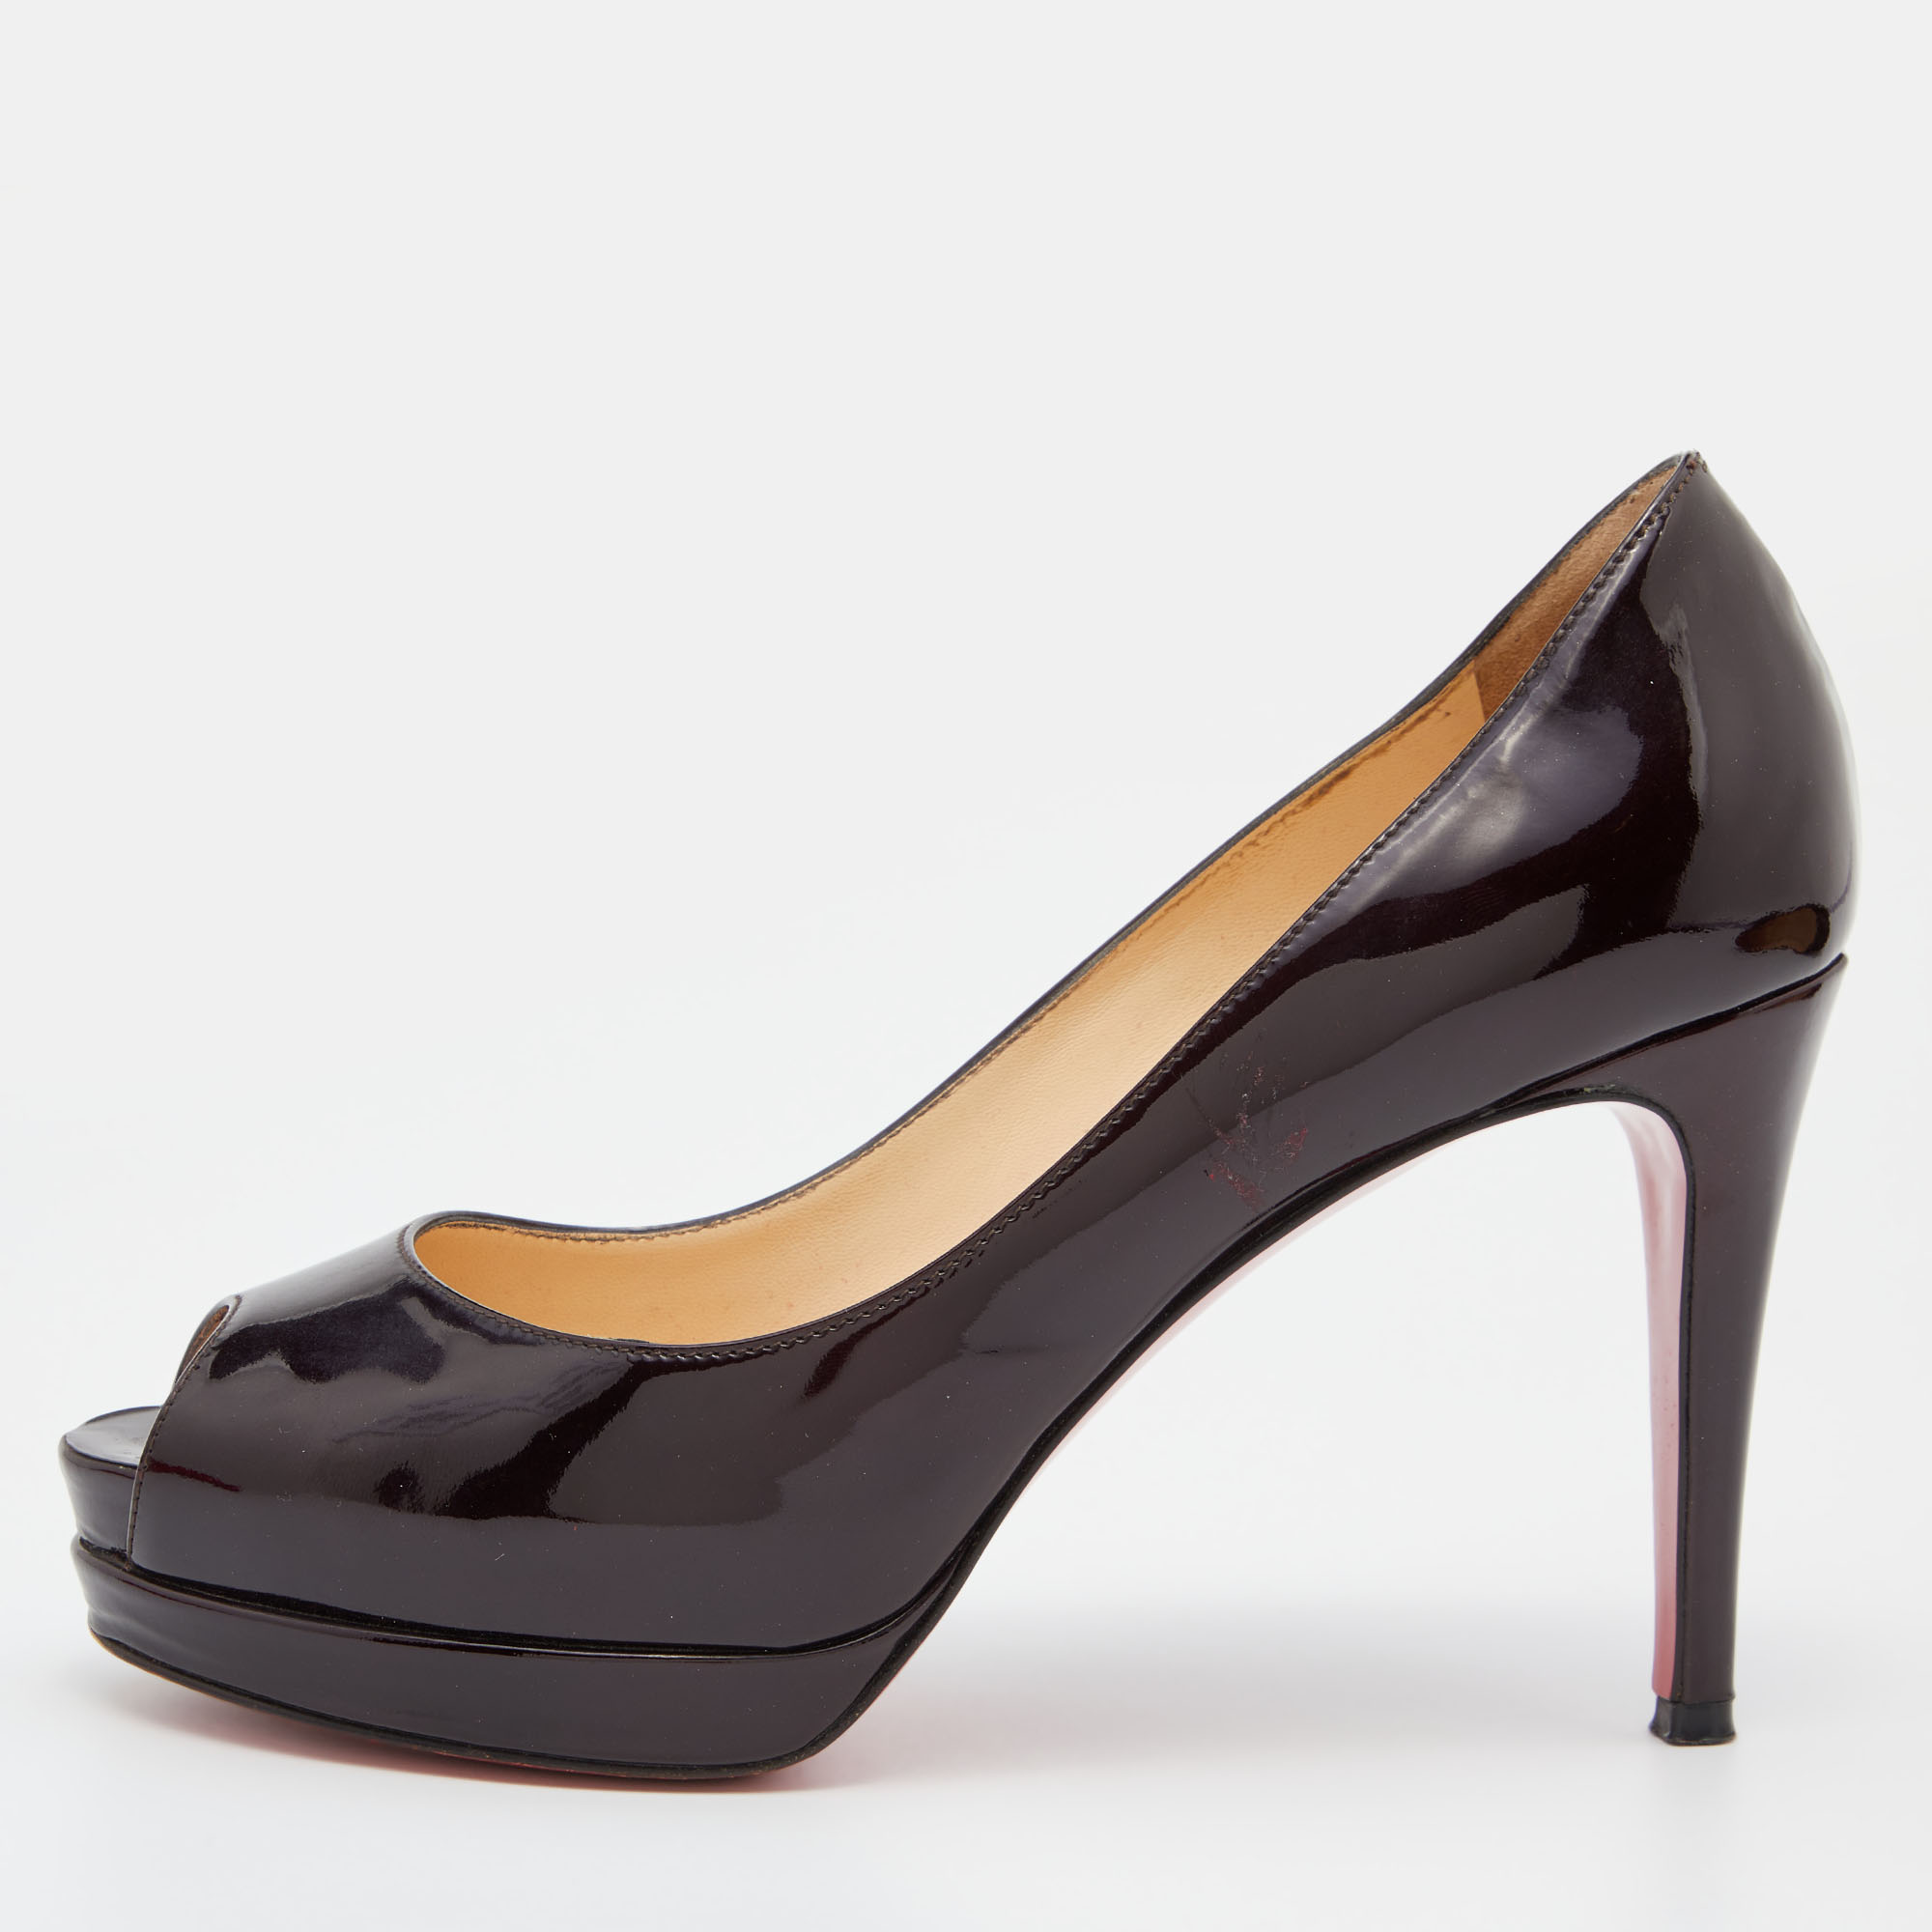 Christian louboutin dark burgundy patent leather altadama peep toe platform pumps size 36.5